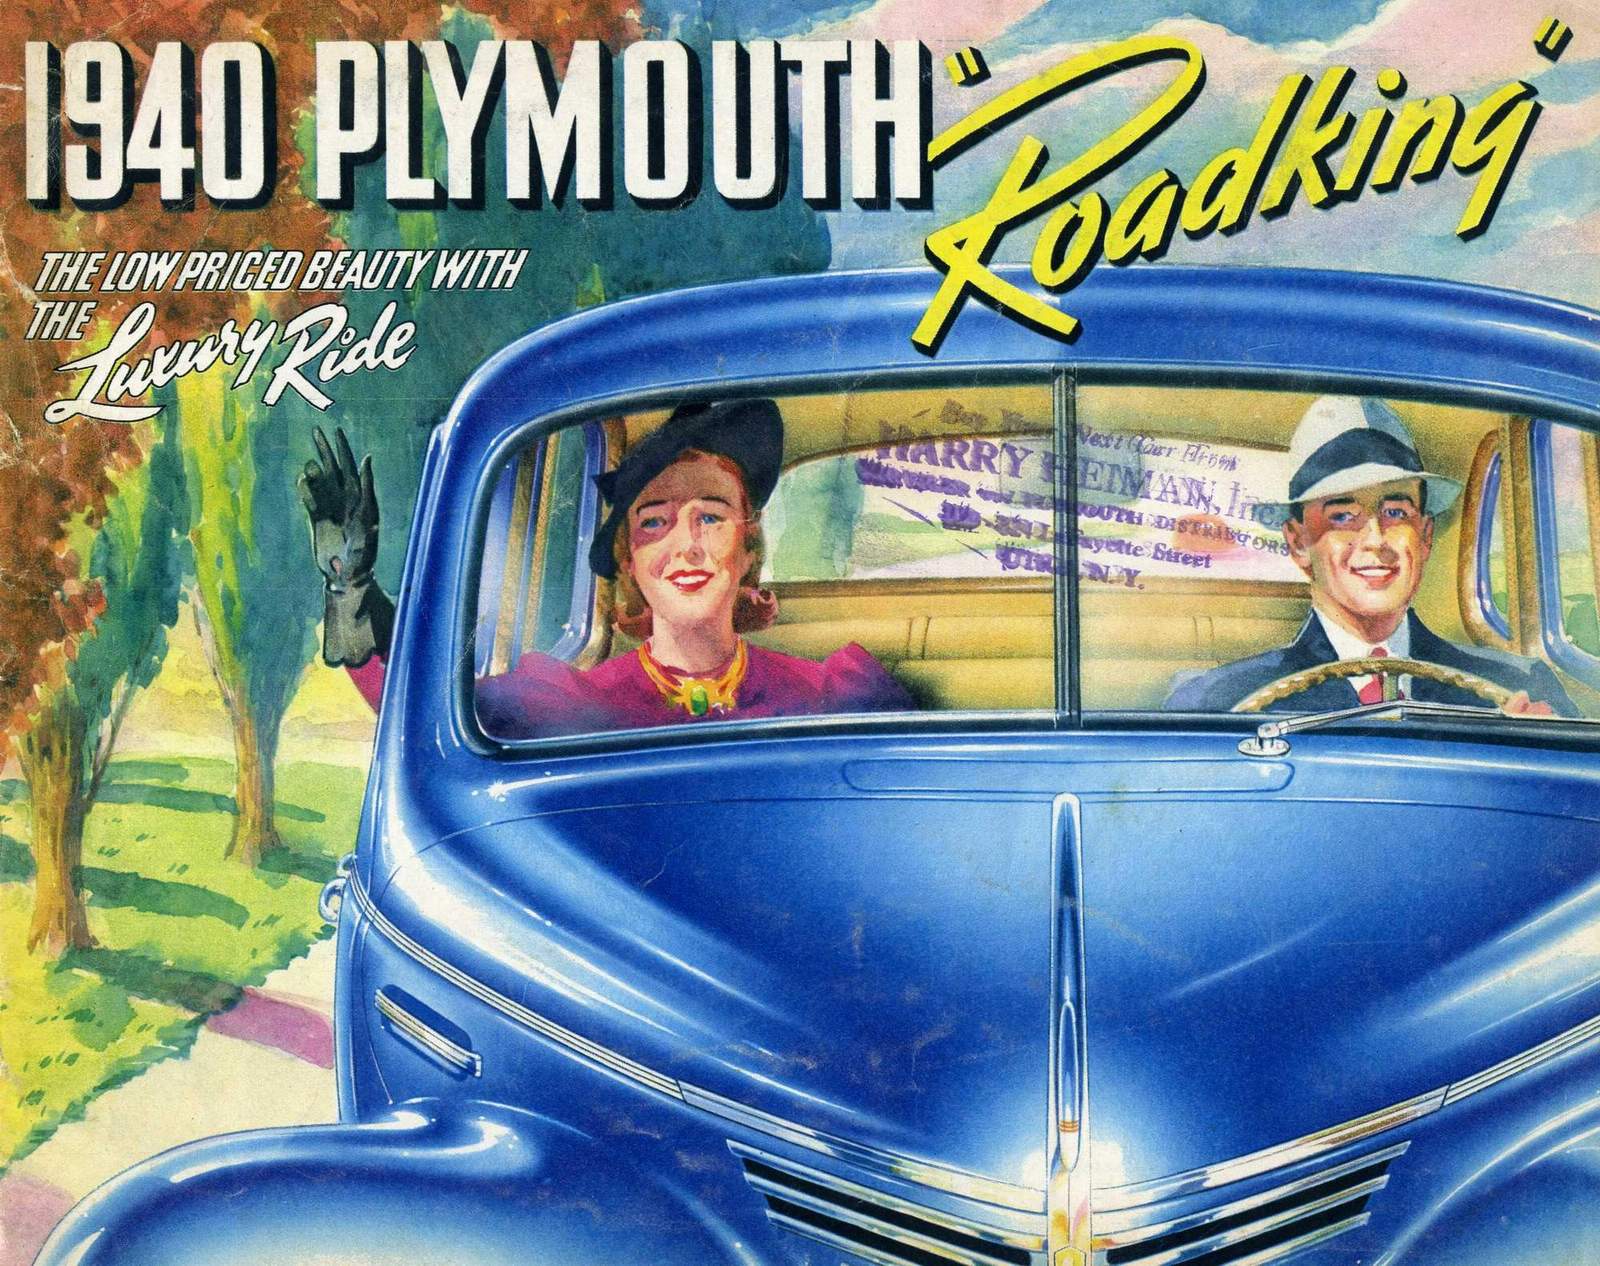 1940 Plymouth Prestige Brochure